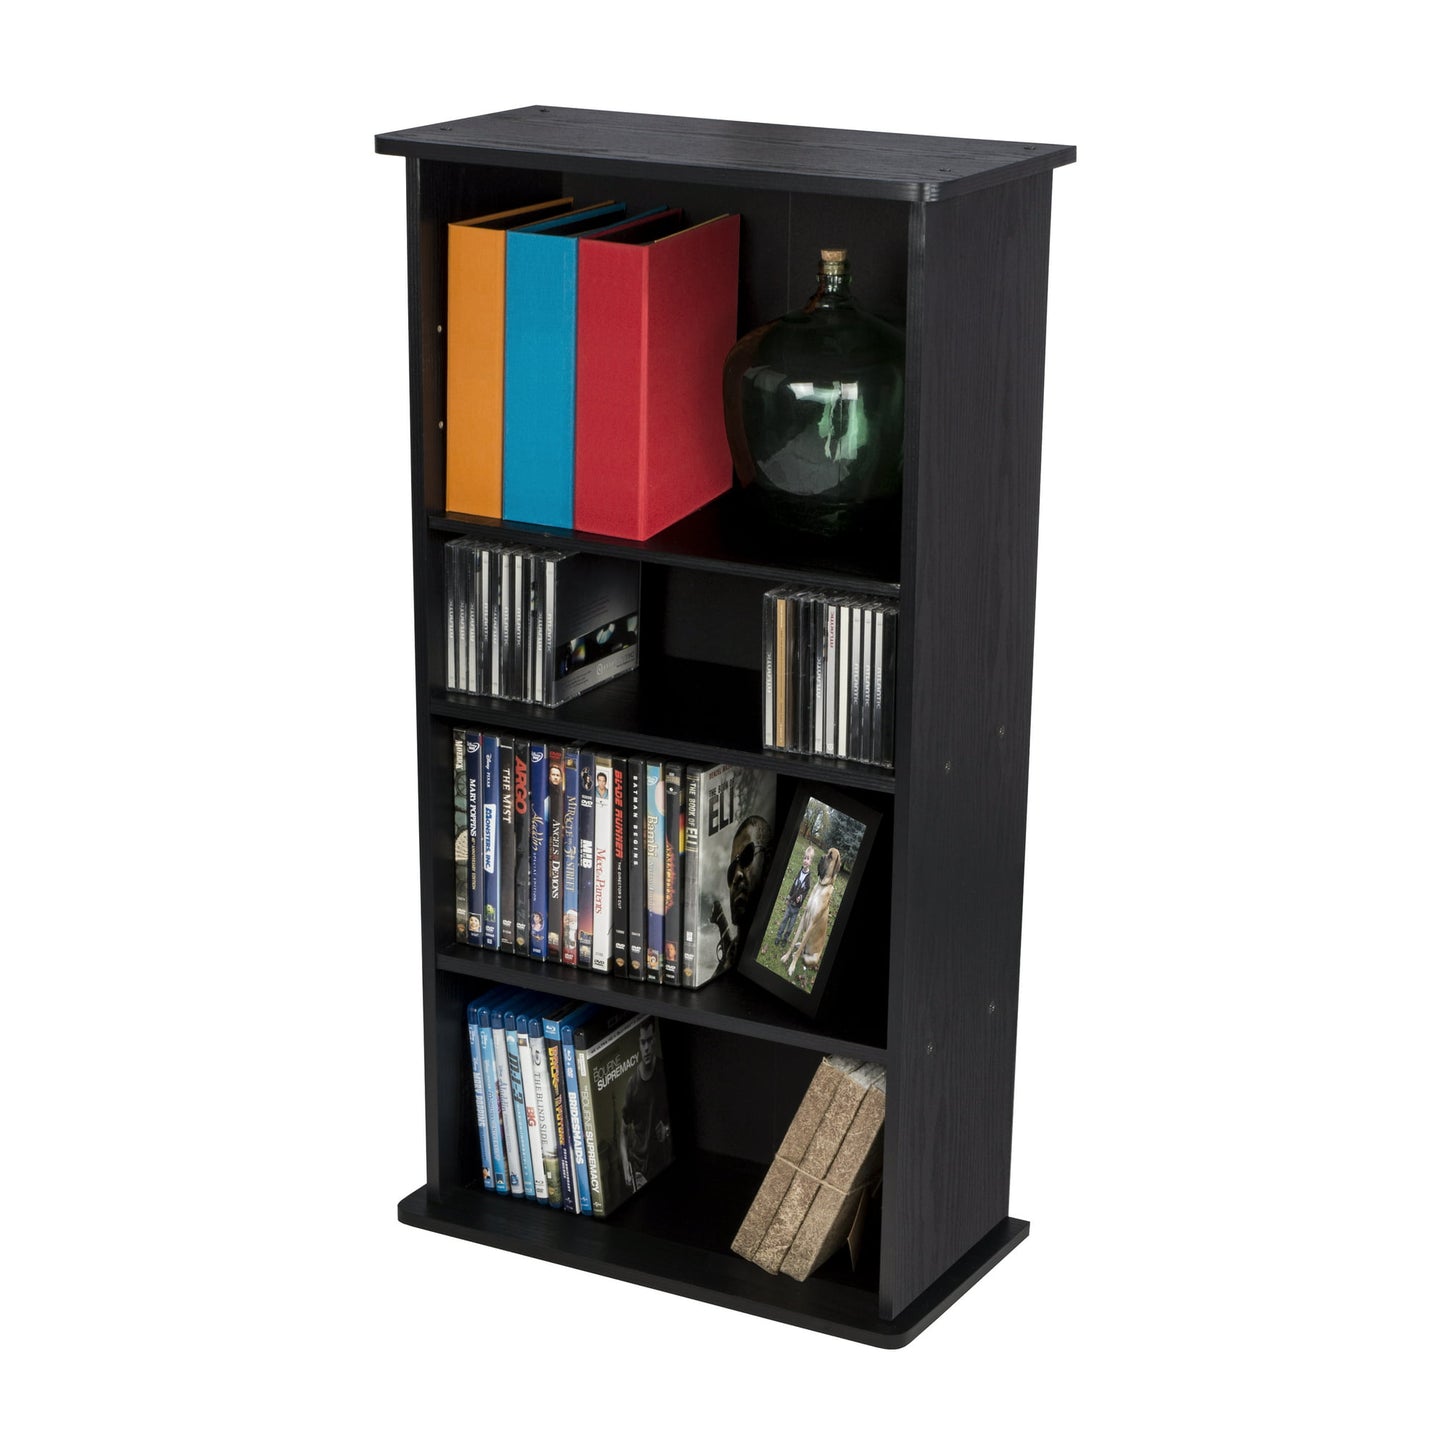 Atlantic 36" Drawbridge XL Wood Media Storage Shelf and Bookcase, 10" Depth (240 CDs, 108 DVDs), Black Woodgrain book shelf